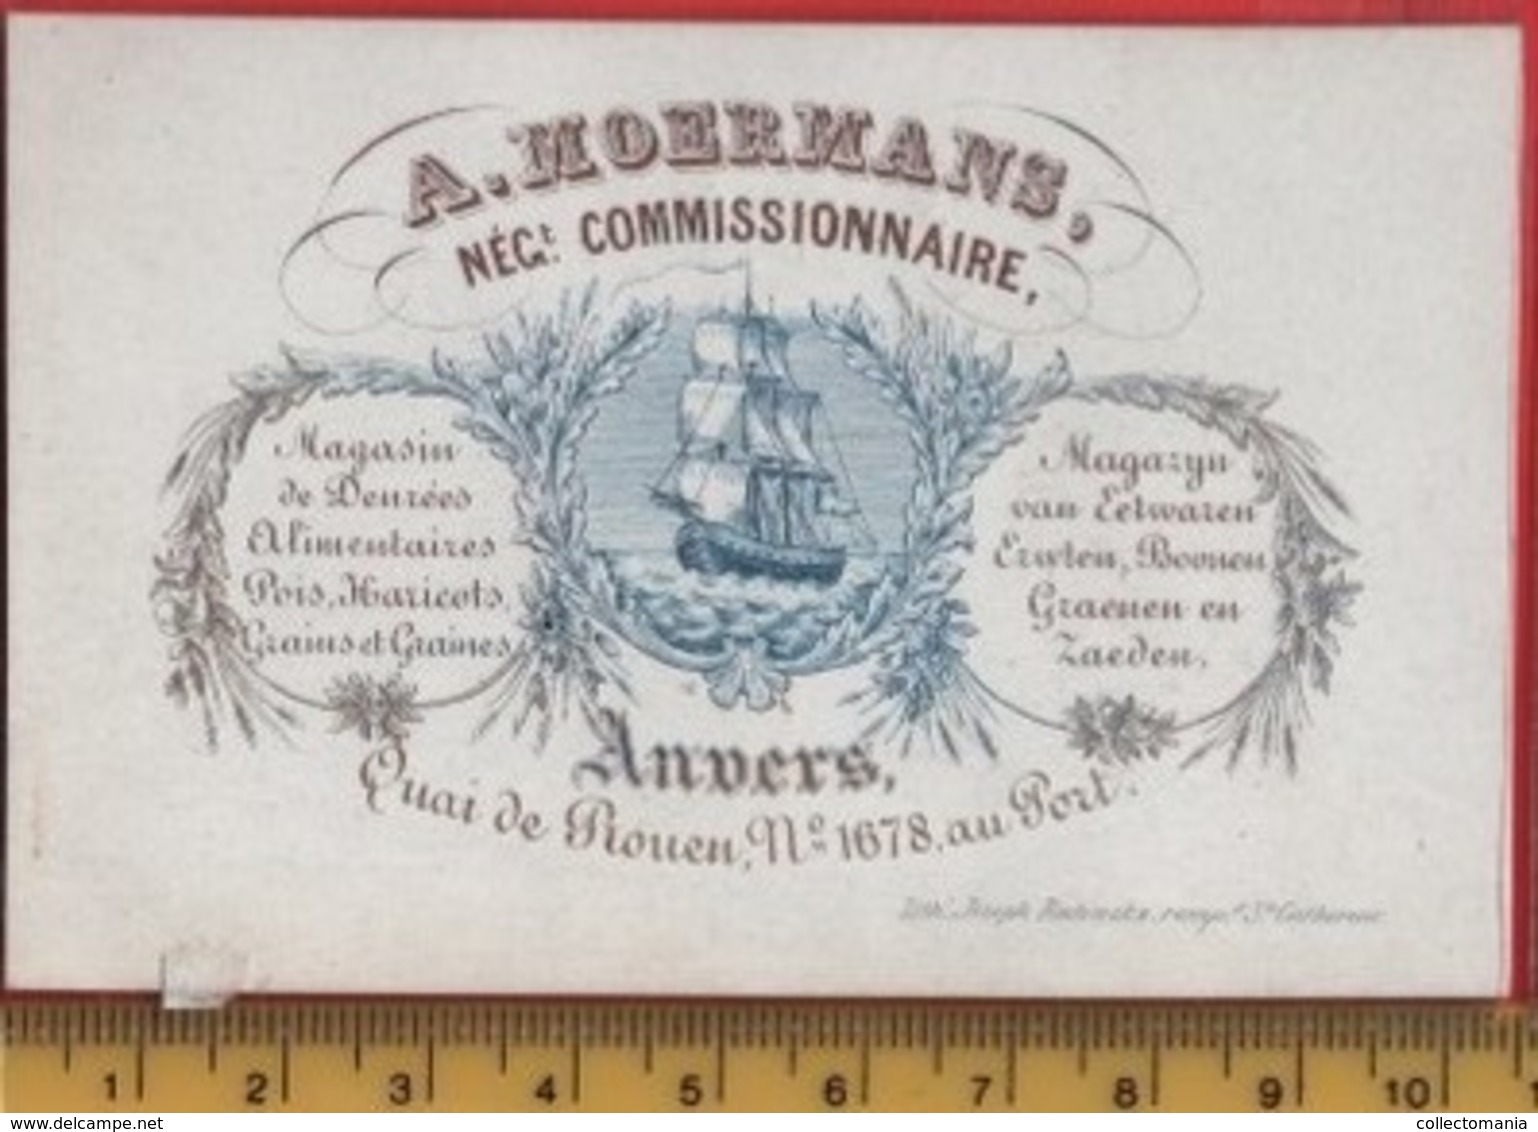 lot85A : 9 ViSiT cards, printer RATiNCKX in ANVERS Antwerpen porseleinkaarten circa 1840 à1860 hand press litho